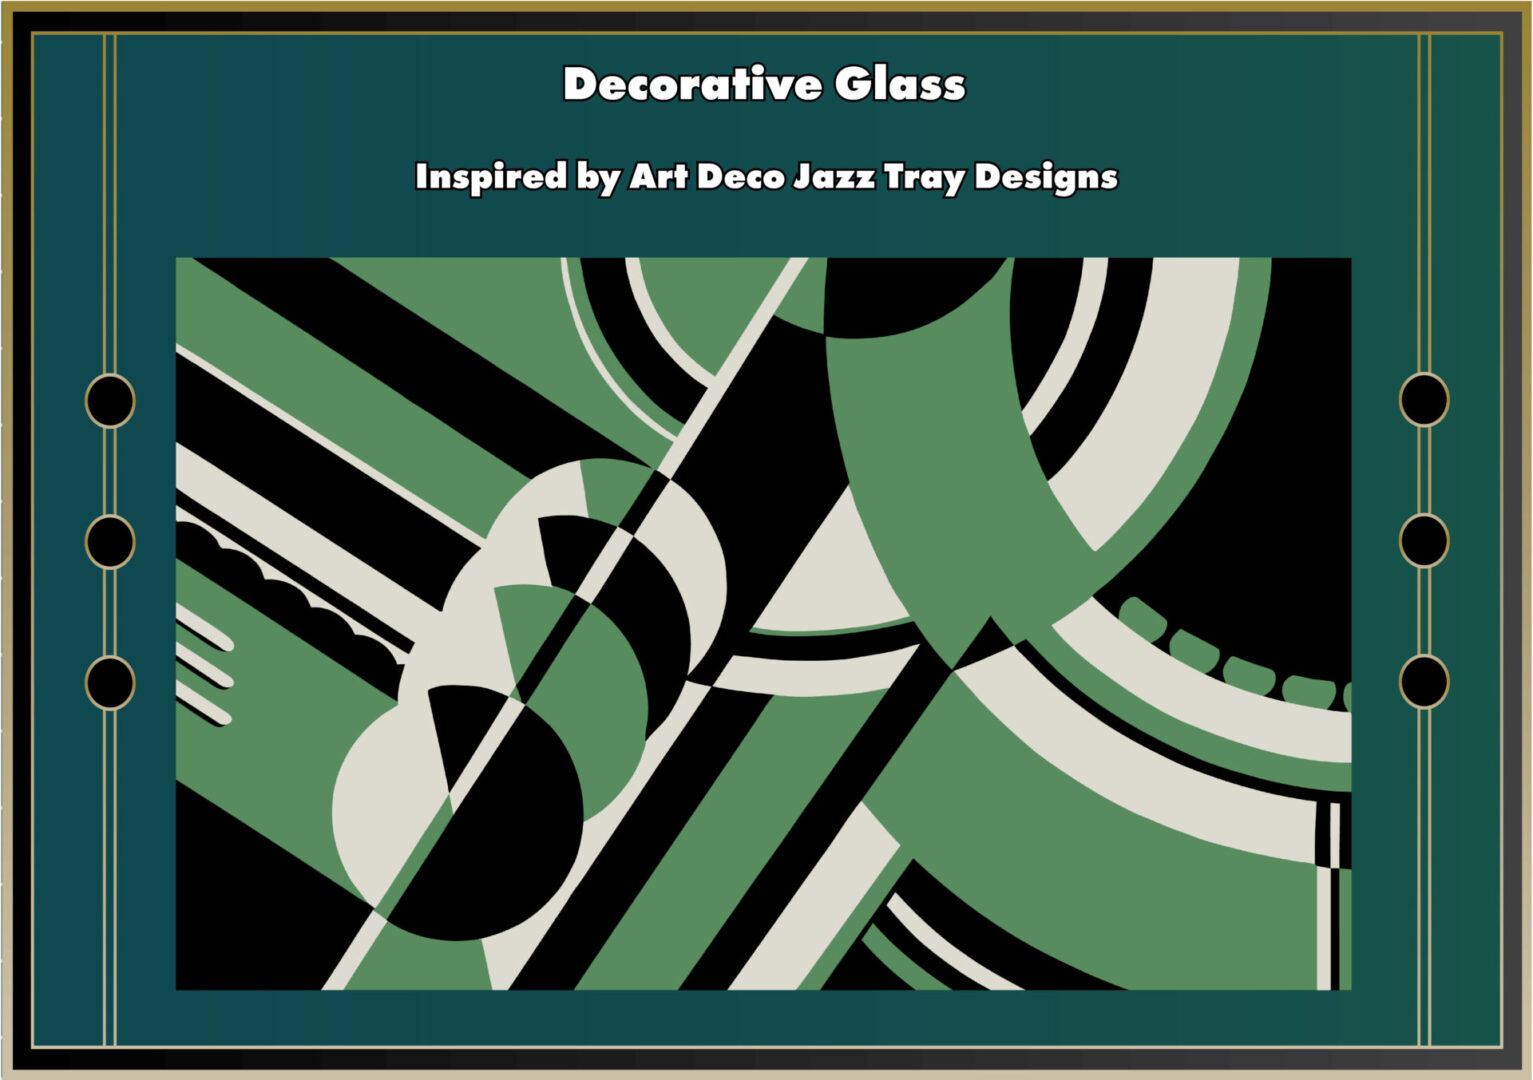 Decorative Glass inspired by Art Deco Jazz Tray Designs